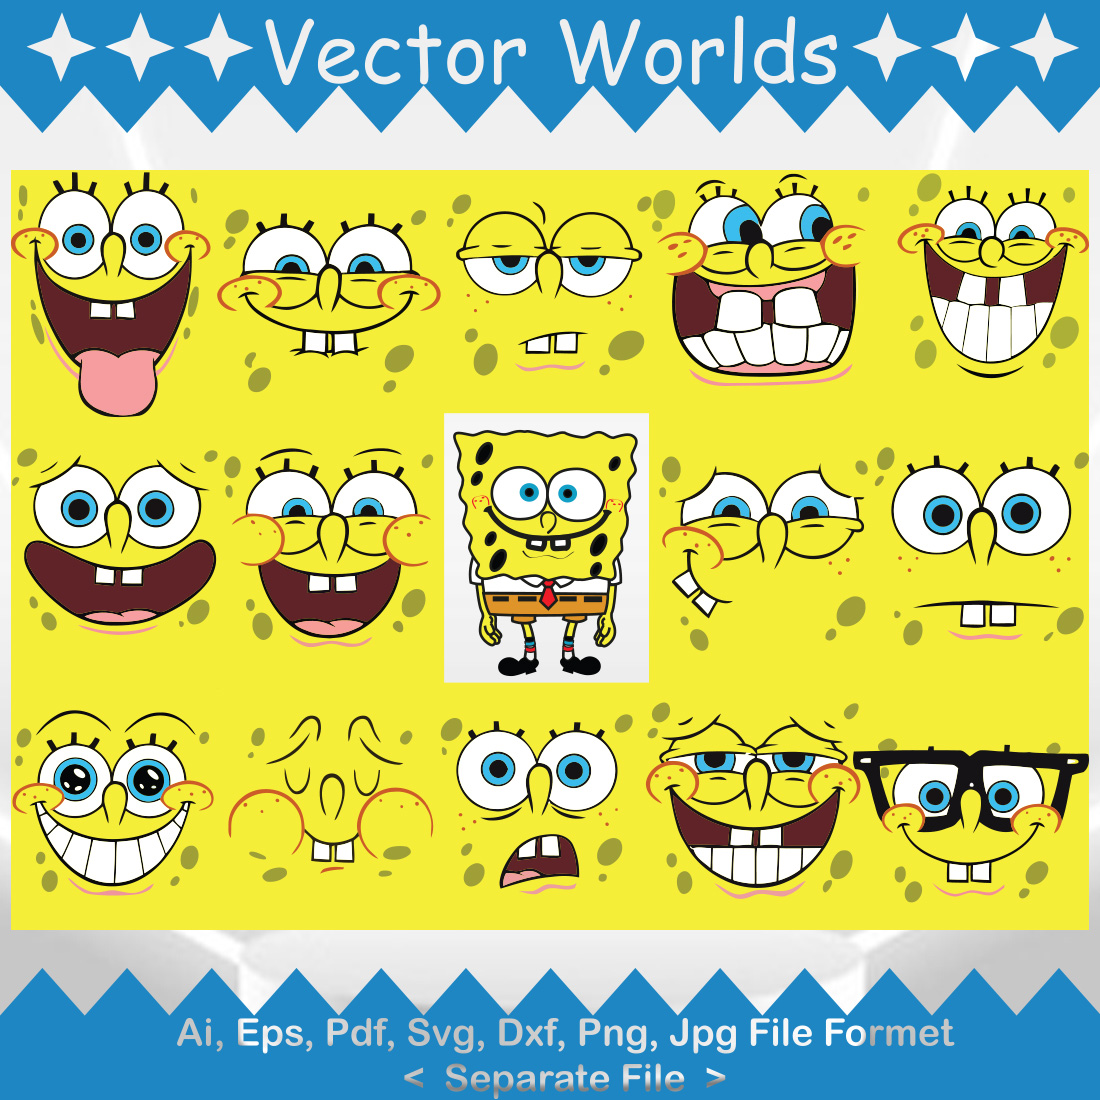 SpongeBob SquarePants Character SVG Vector Design cover image.